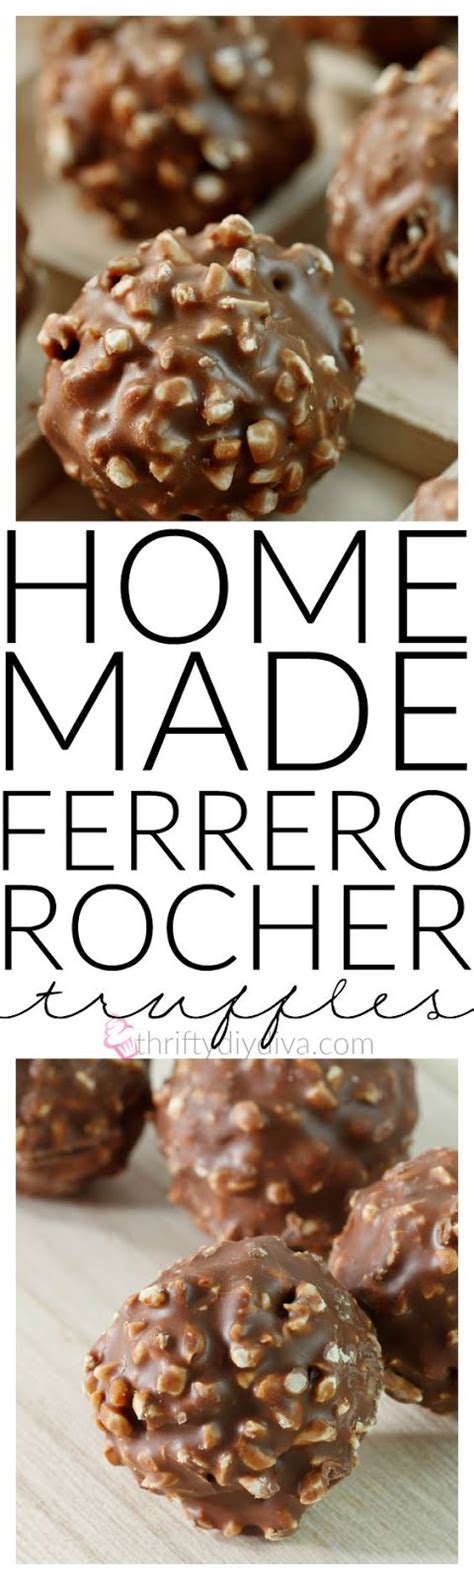 Homemade Ferrero Rocher Hazelnut Truffles MOTHER RECIPE USA